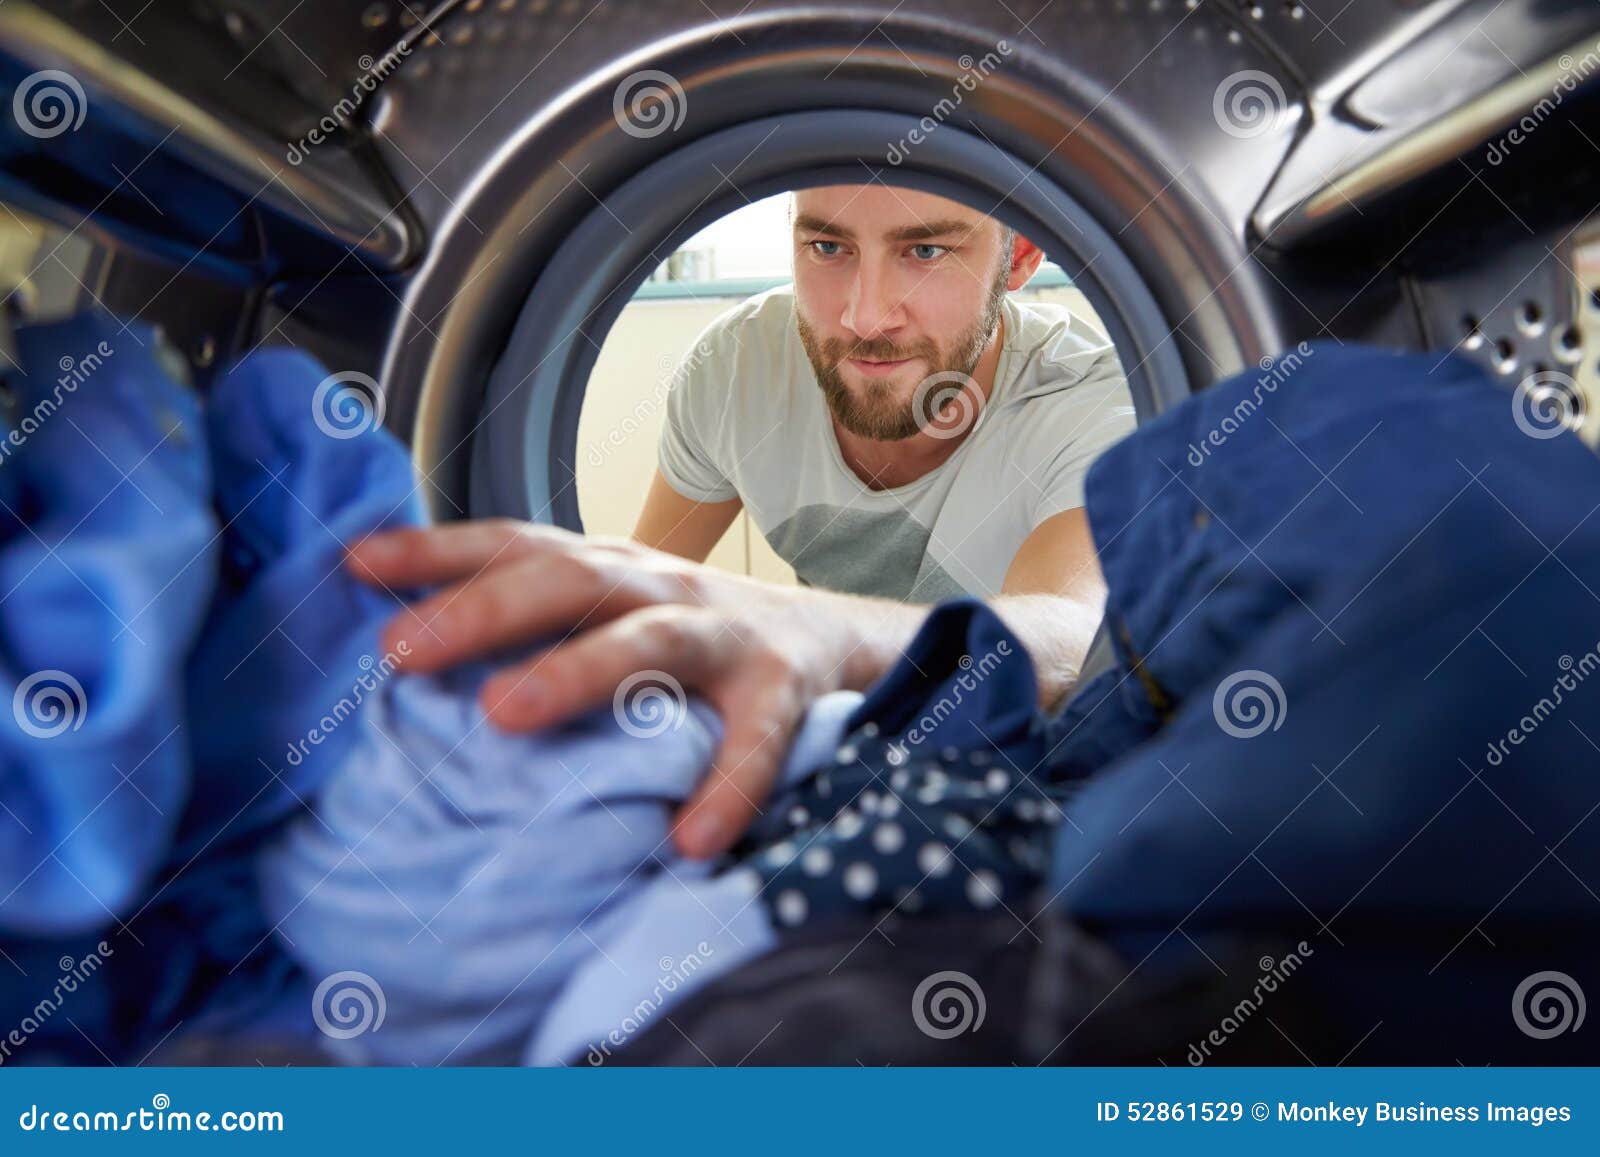 man doing laundry reaching inside washing machine